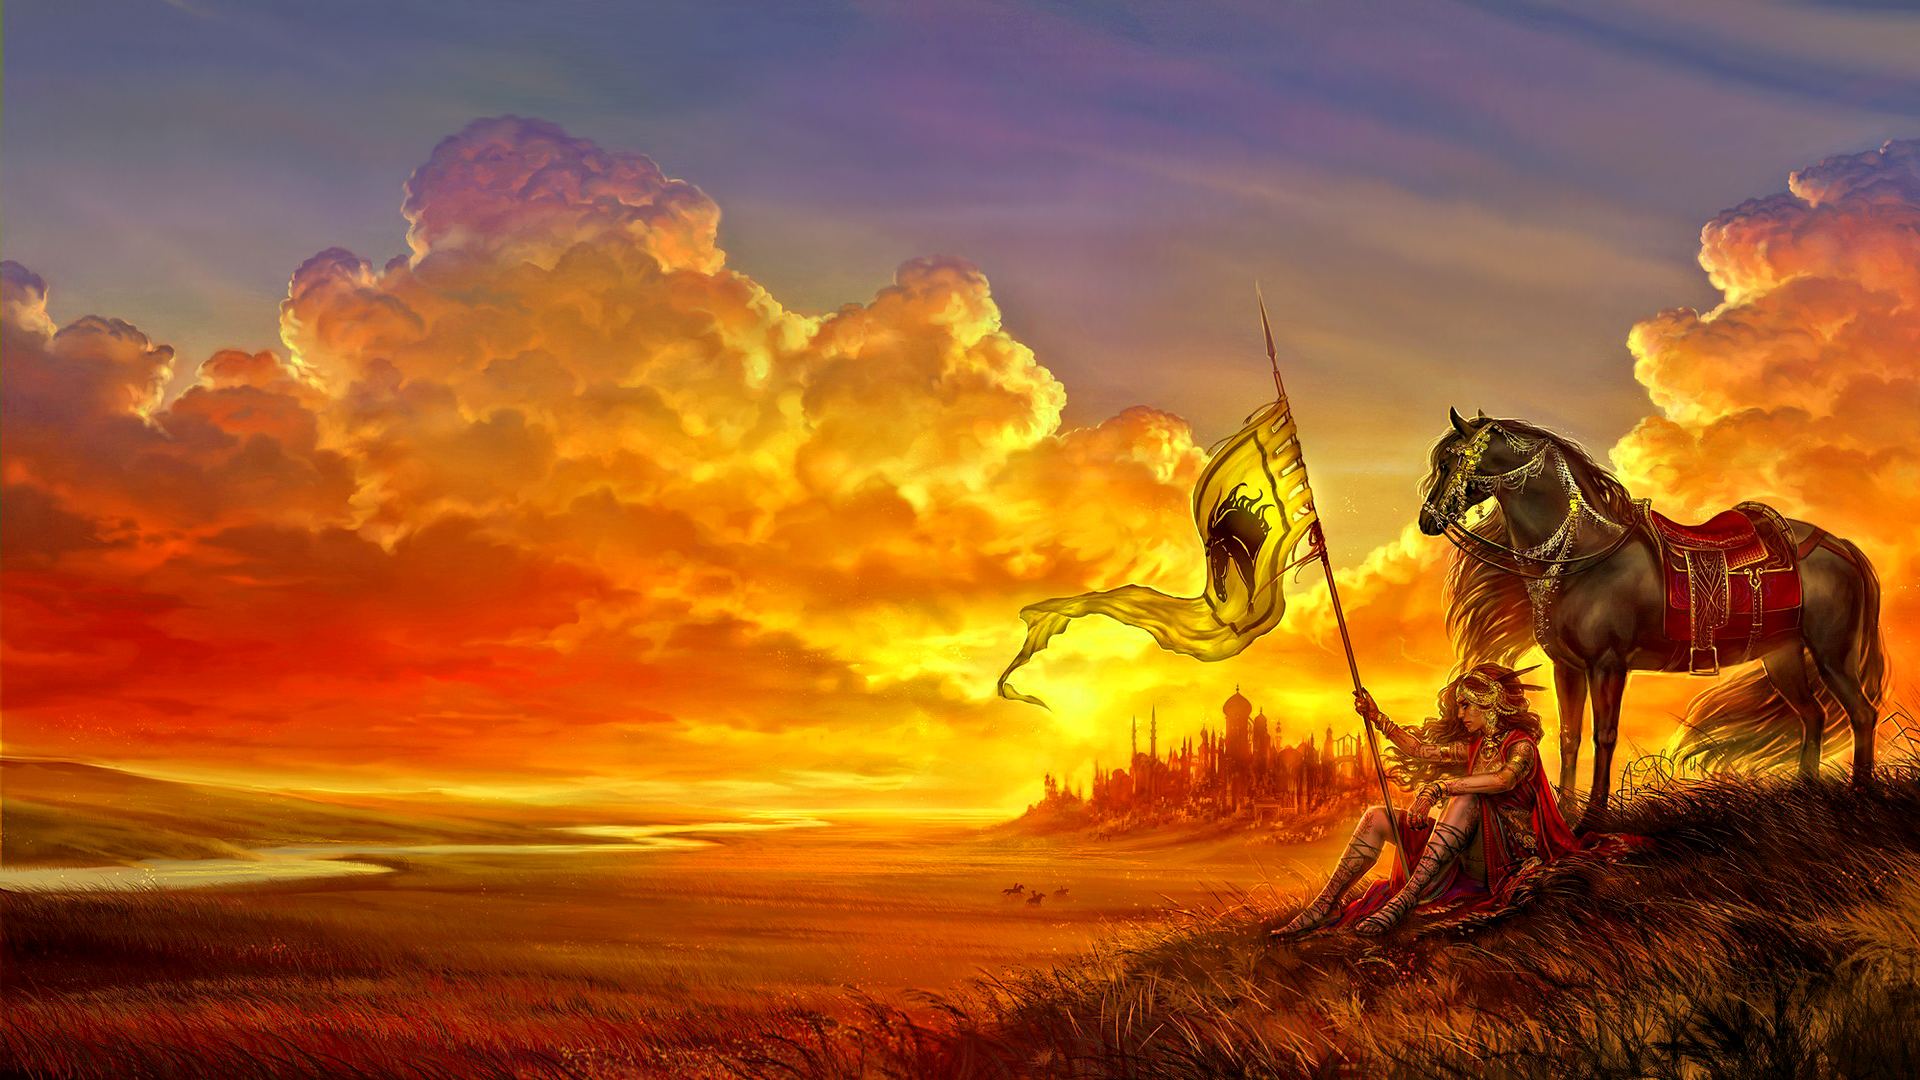 Fantasy Sky Nature Background Wallpapers On Desktop - Fantasy Landscape With Warrior - HD Wallpaper 